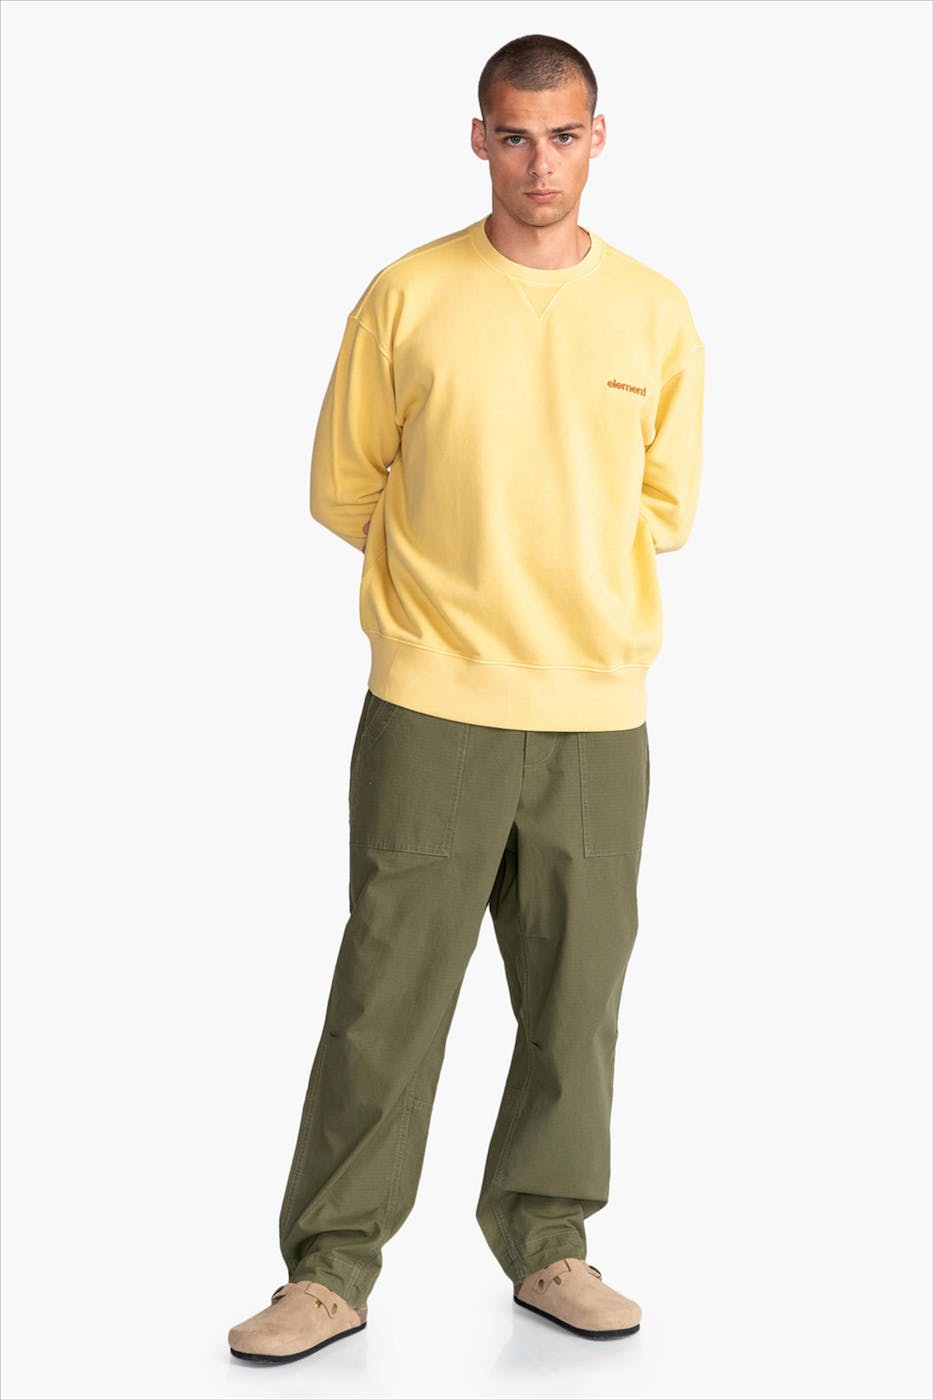 Element - Gele Cornell 3.0 sweater